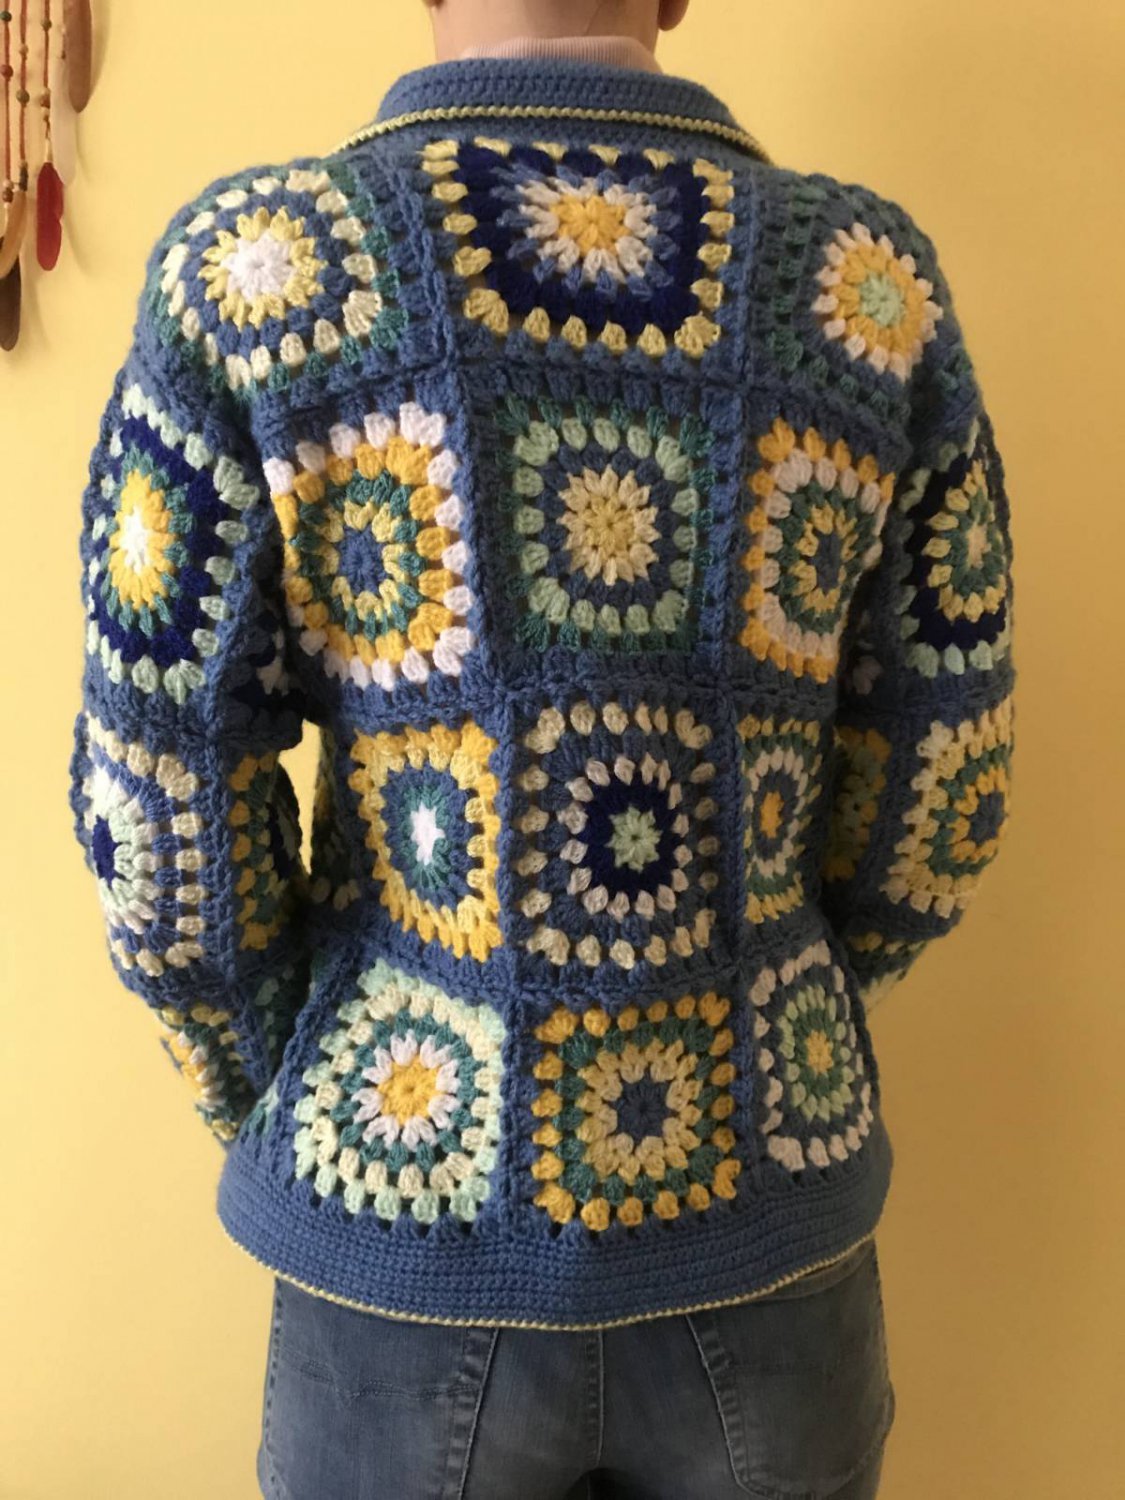 Granny square crochet jacket